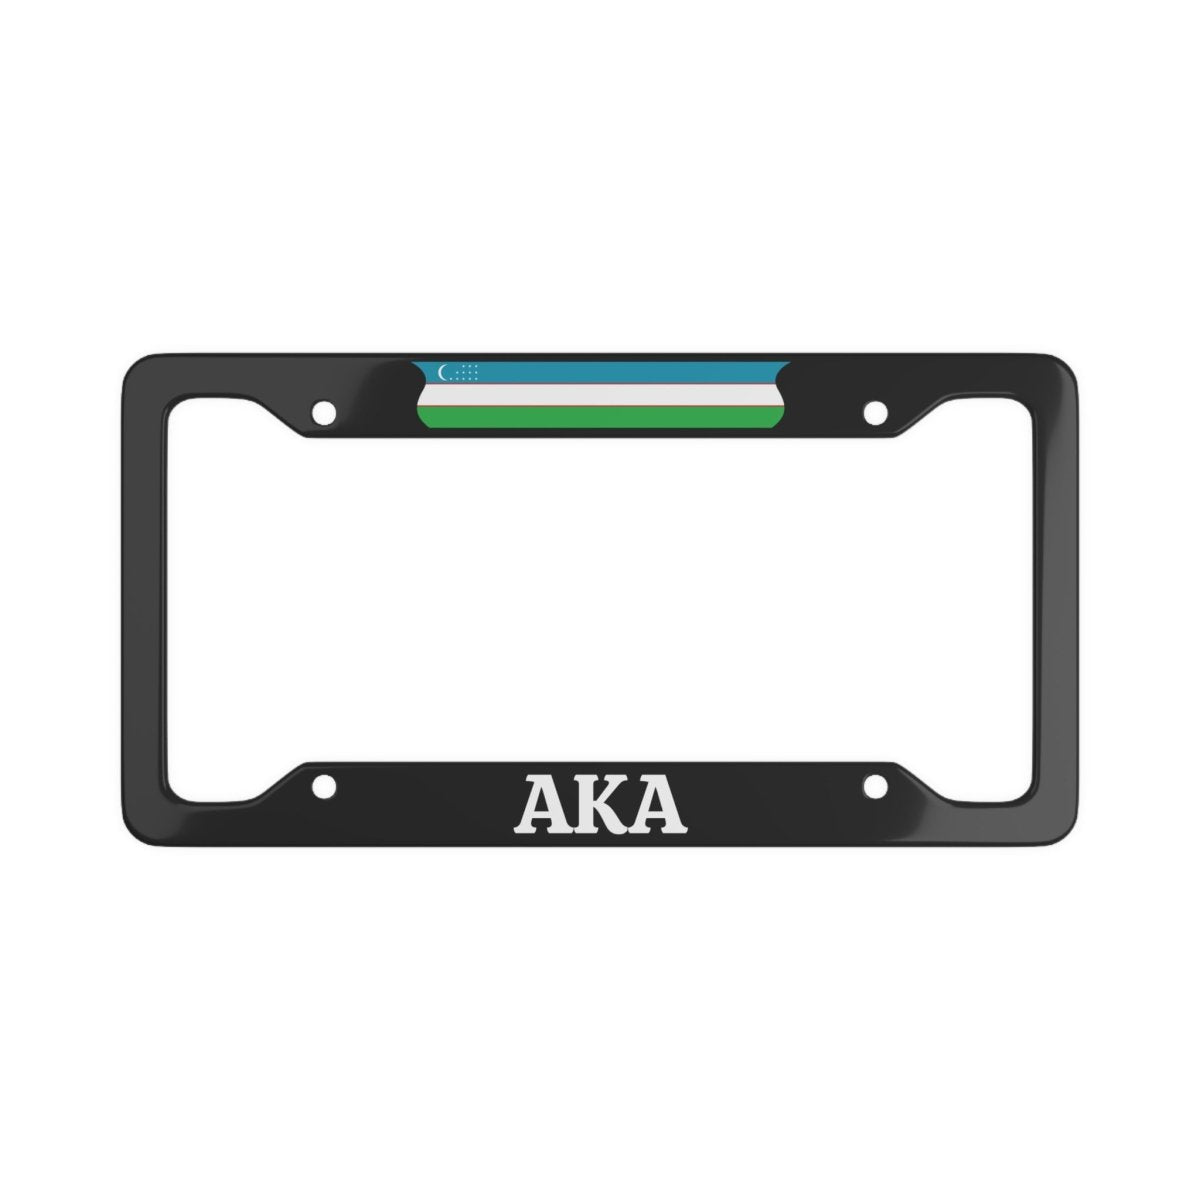 Aka License Plate Frame - Cultics